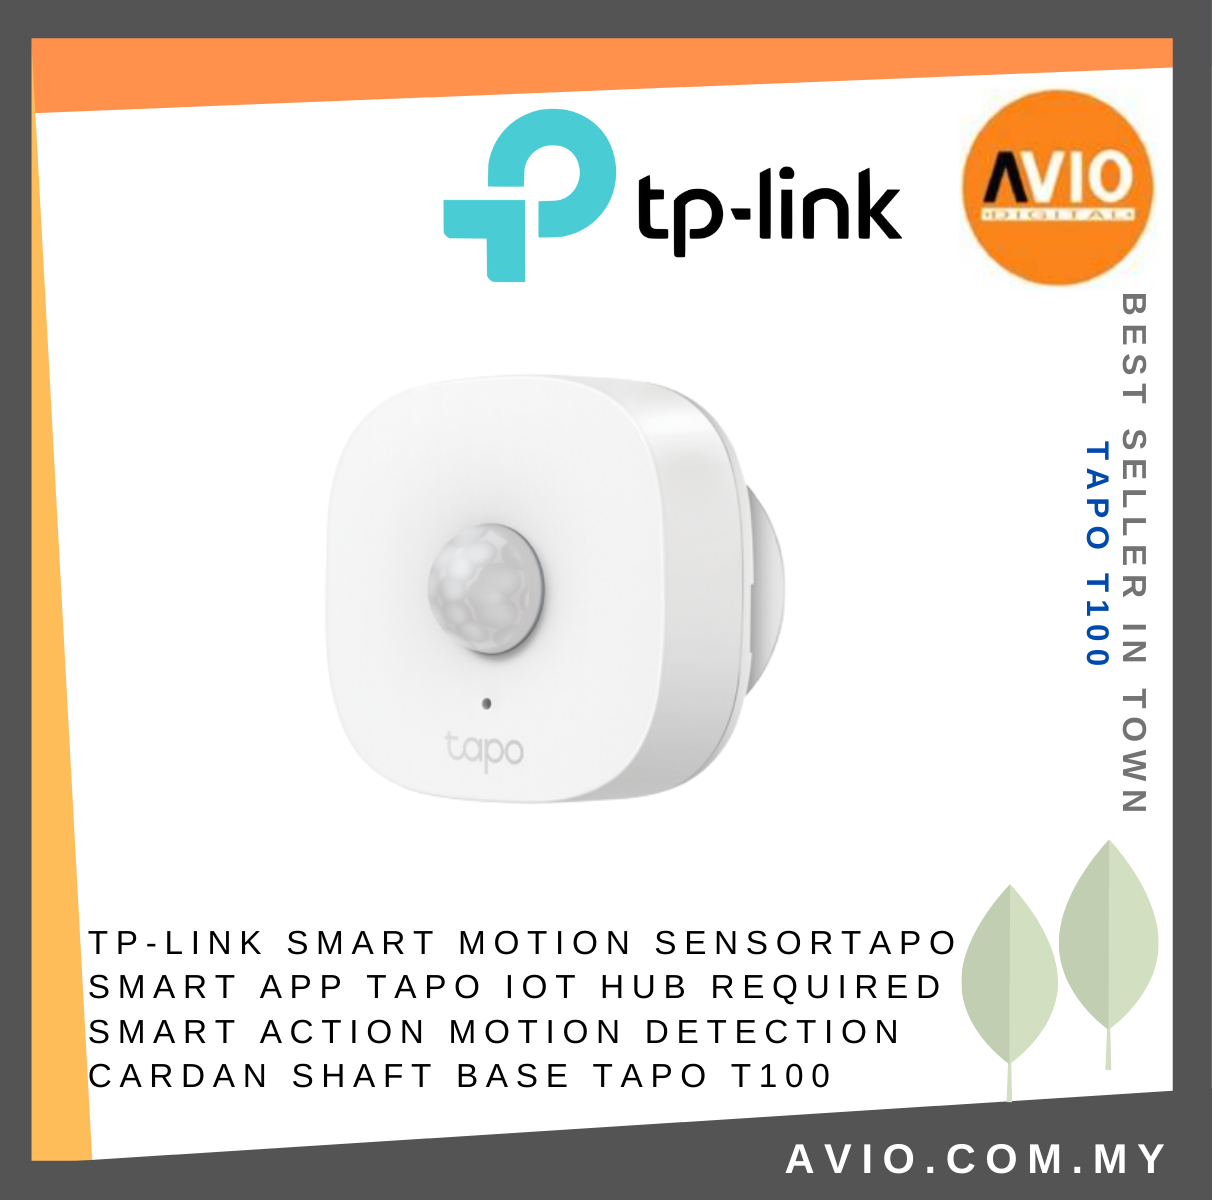 TP LINK Tapo T100 - Tapo Smart Motion Sensor